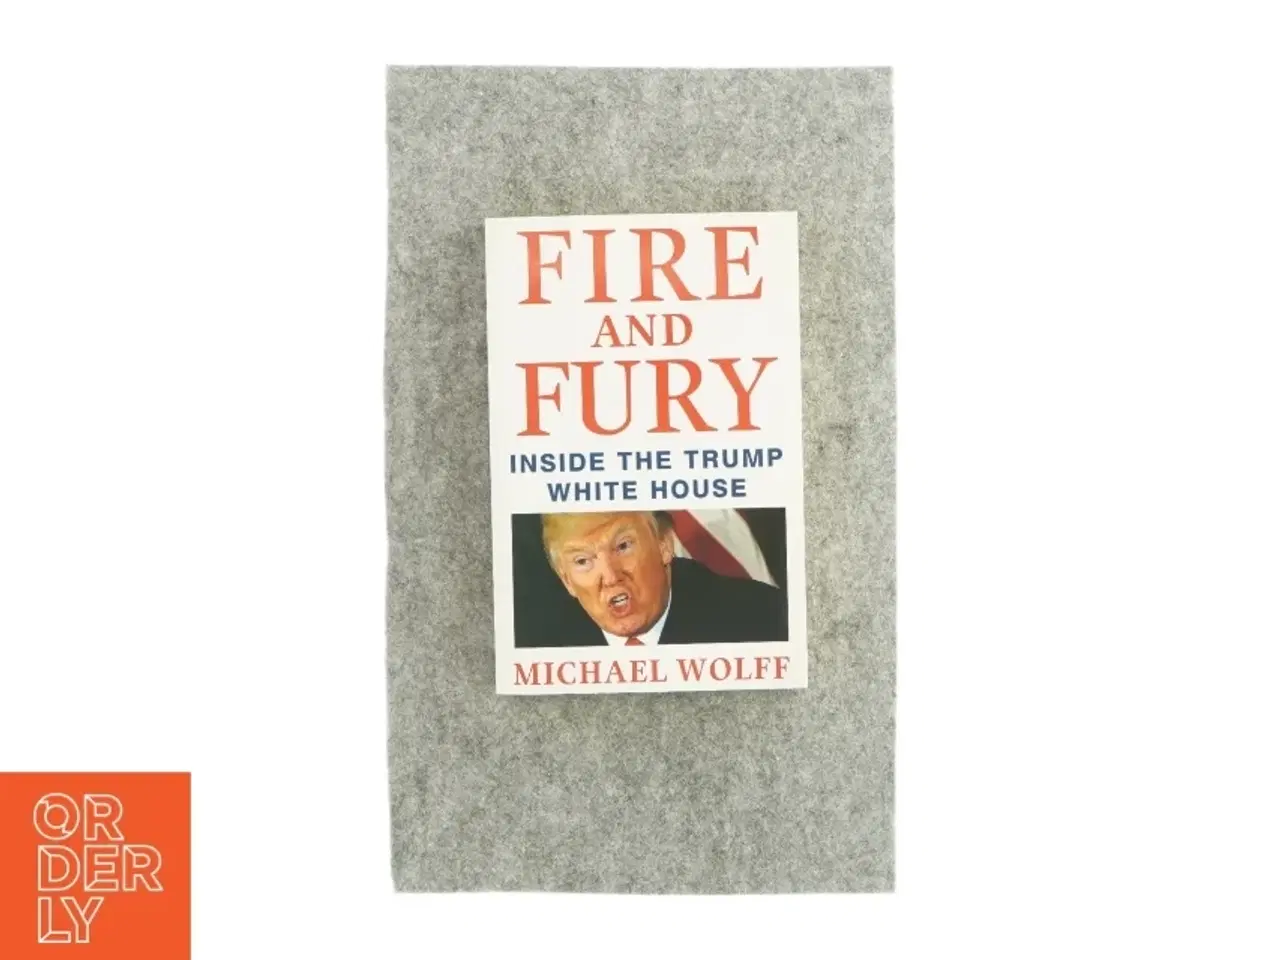 Billede 1 - Fire and fury inside the Trump white House af Michael Wolff (bog)